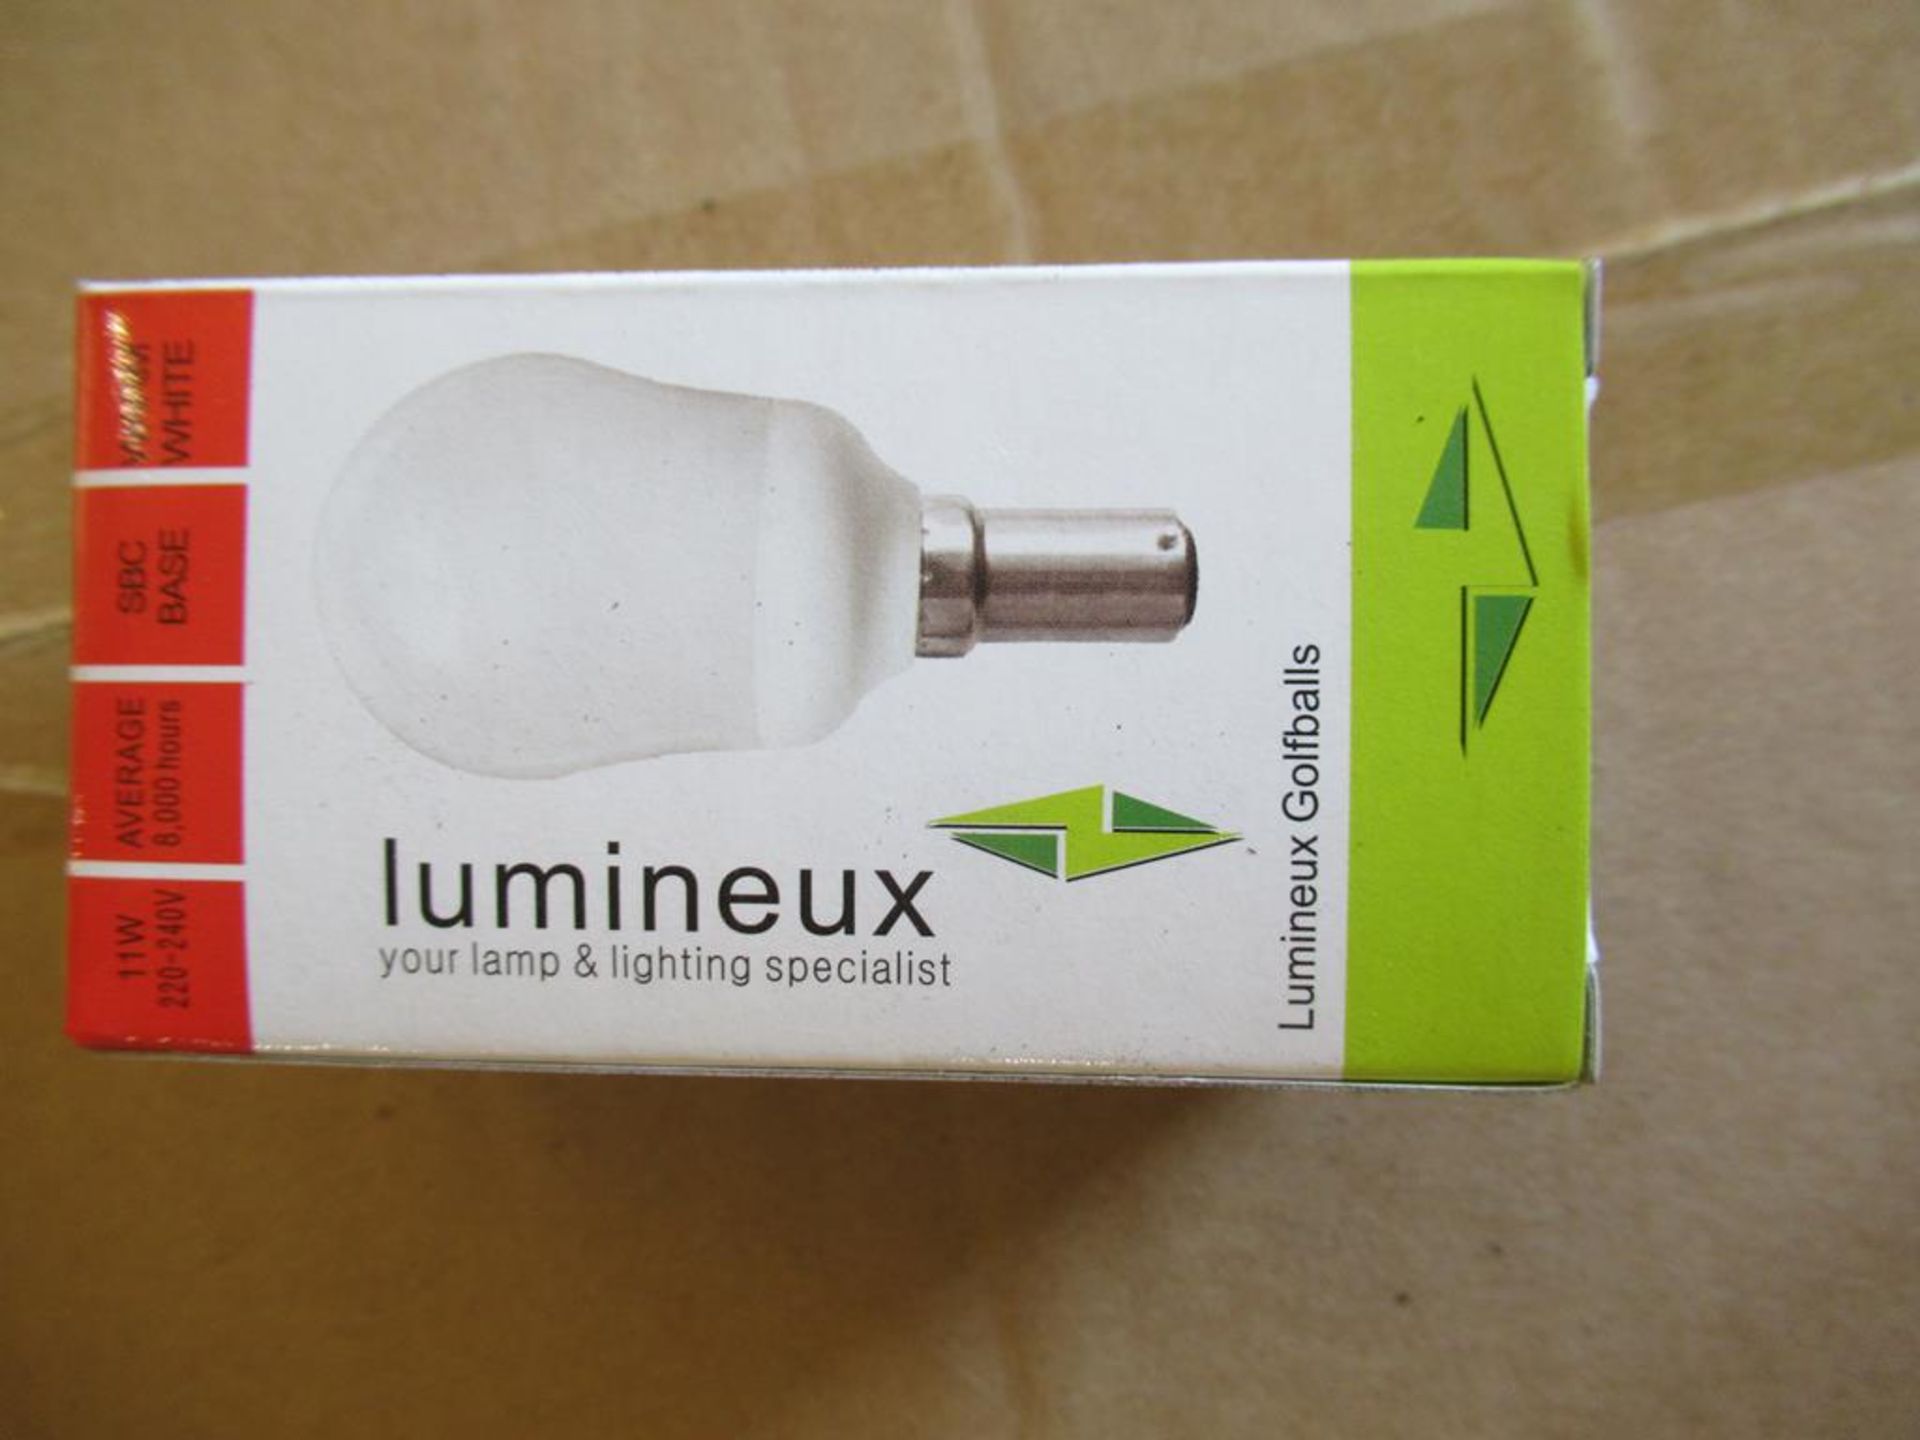 3x boxes of Lumineux Golf Ball CFL 11W B15 2700K Warm White Bulbs (100pcs per box) - Image 4 of 5